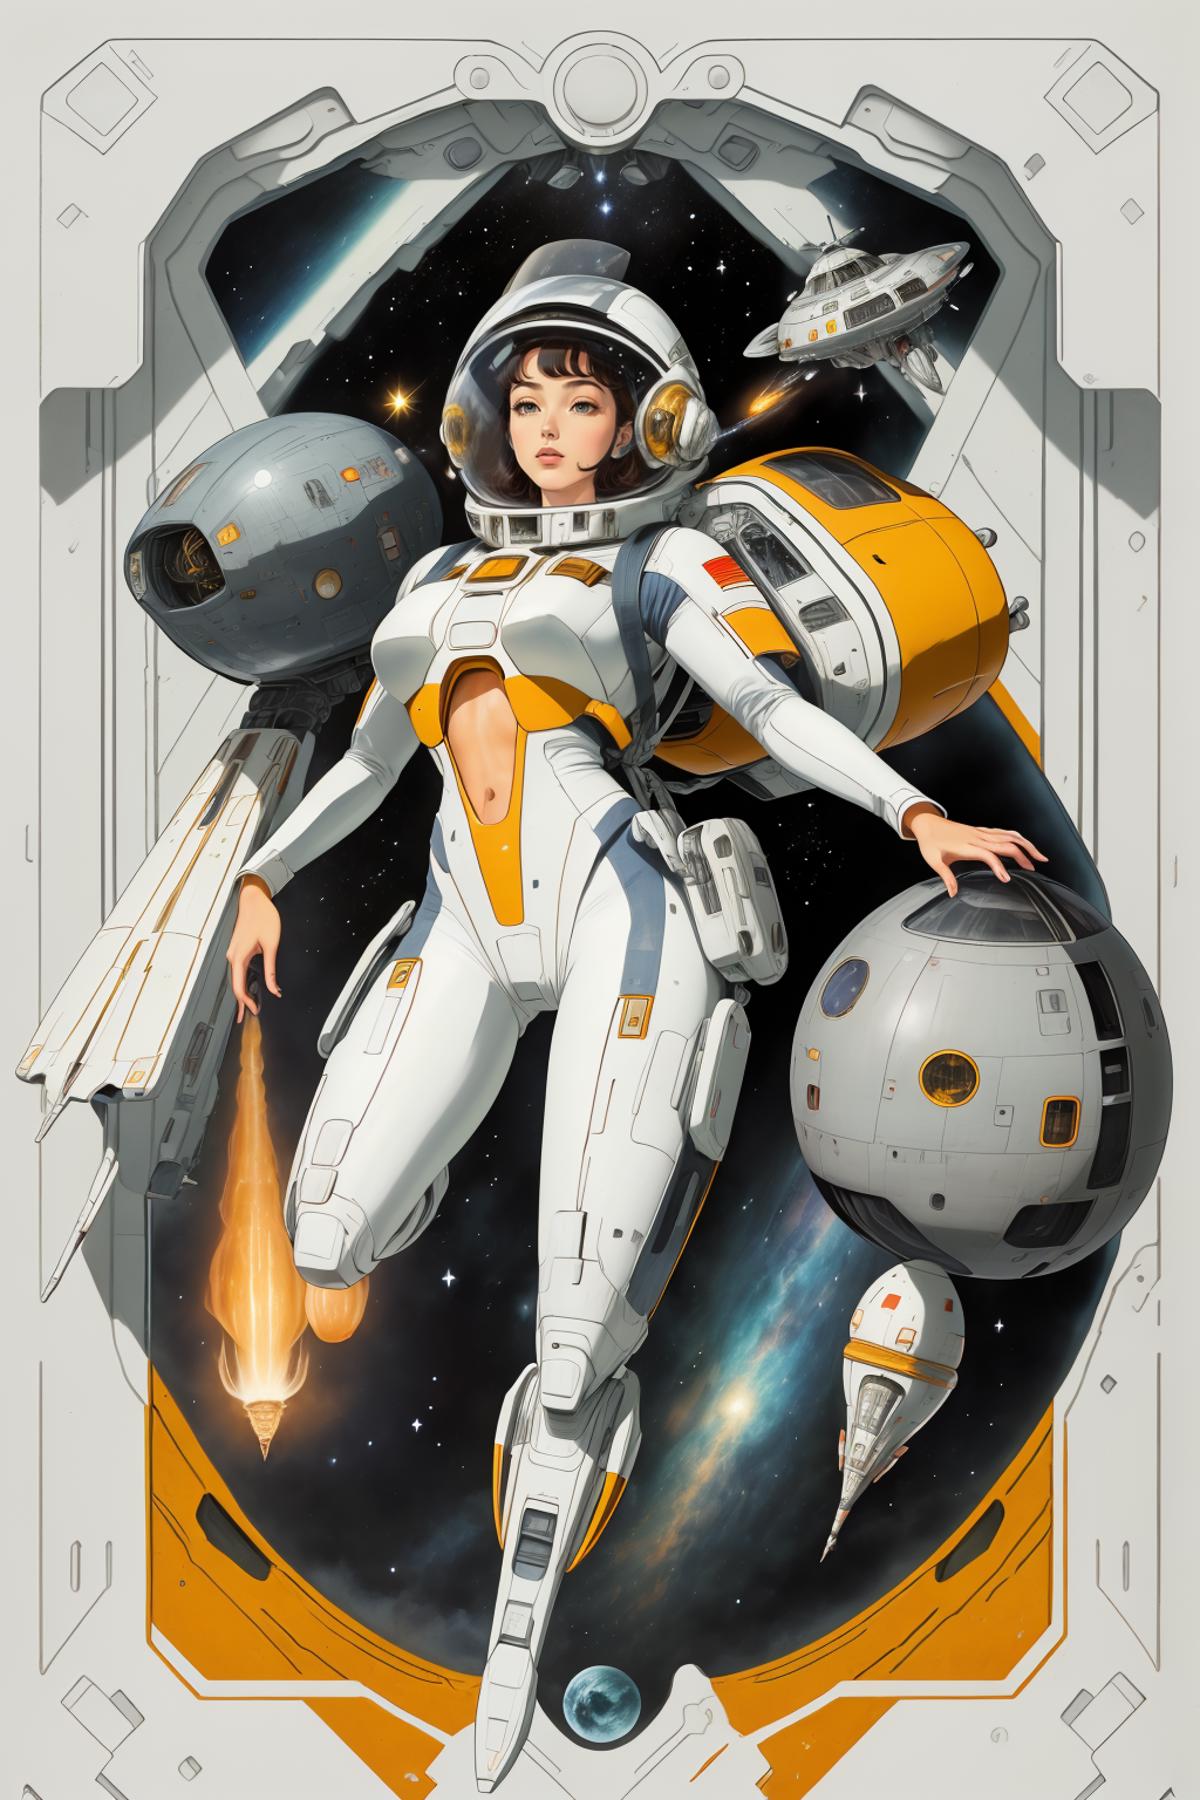 retro-spacecraft 复古飞船 image by daohuozhe428569